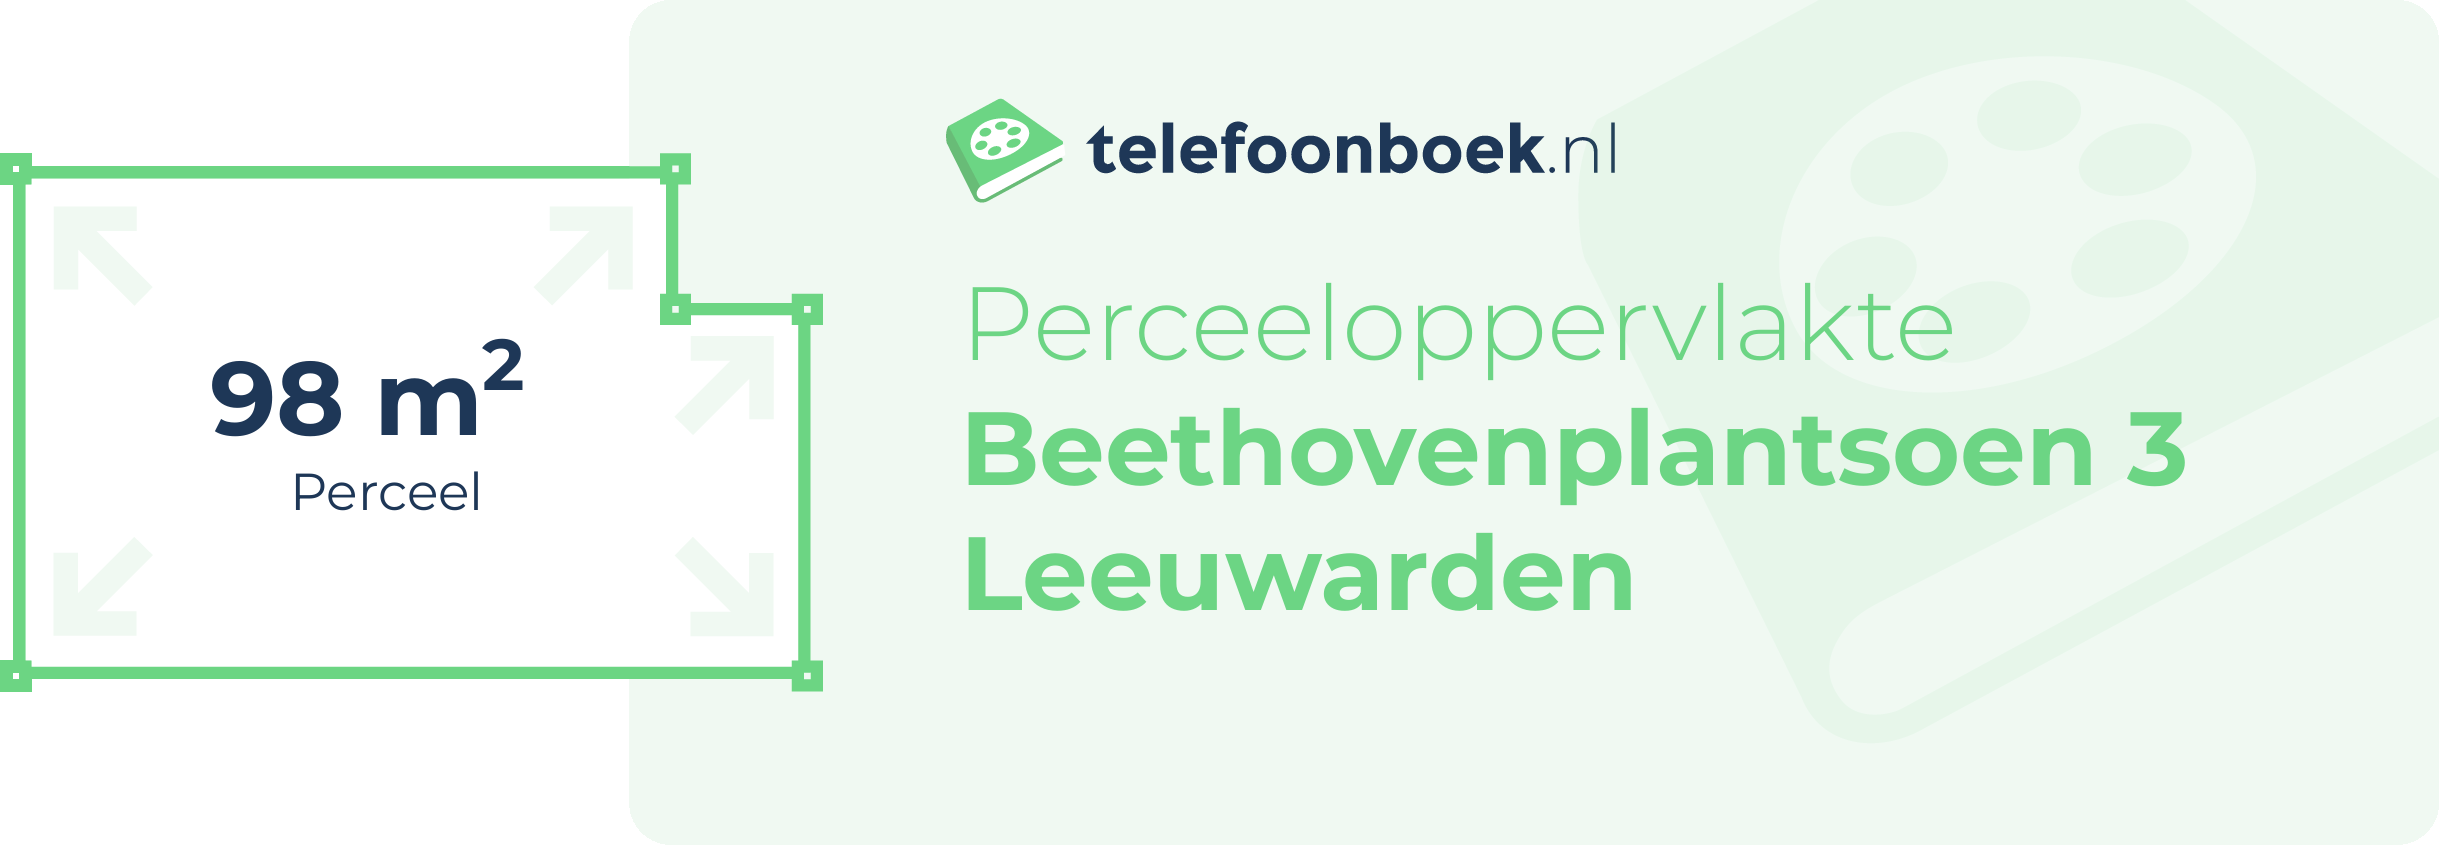 Perceeloppervlakte Beethovenplantsoen 3 Leeuwarden